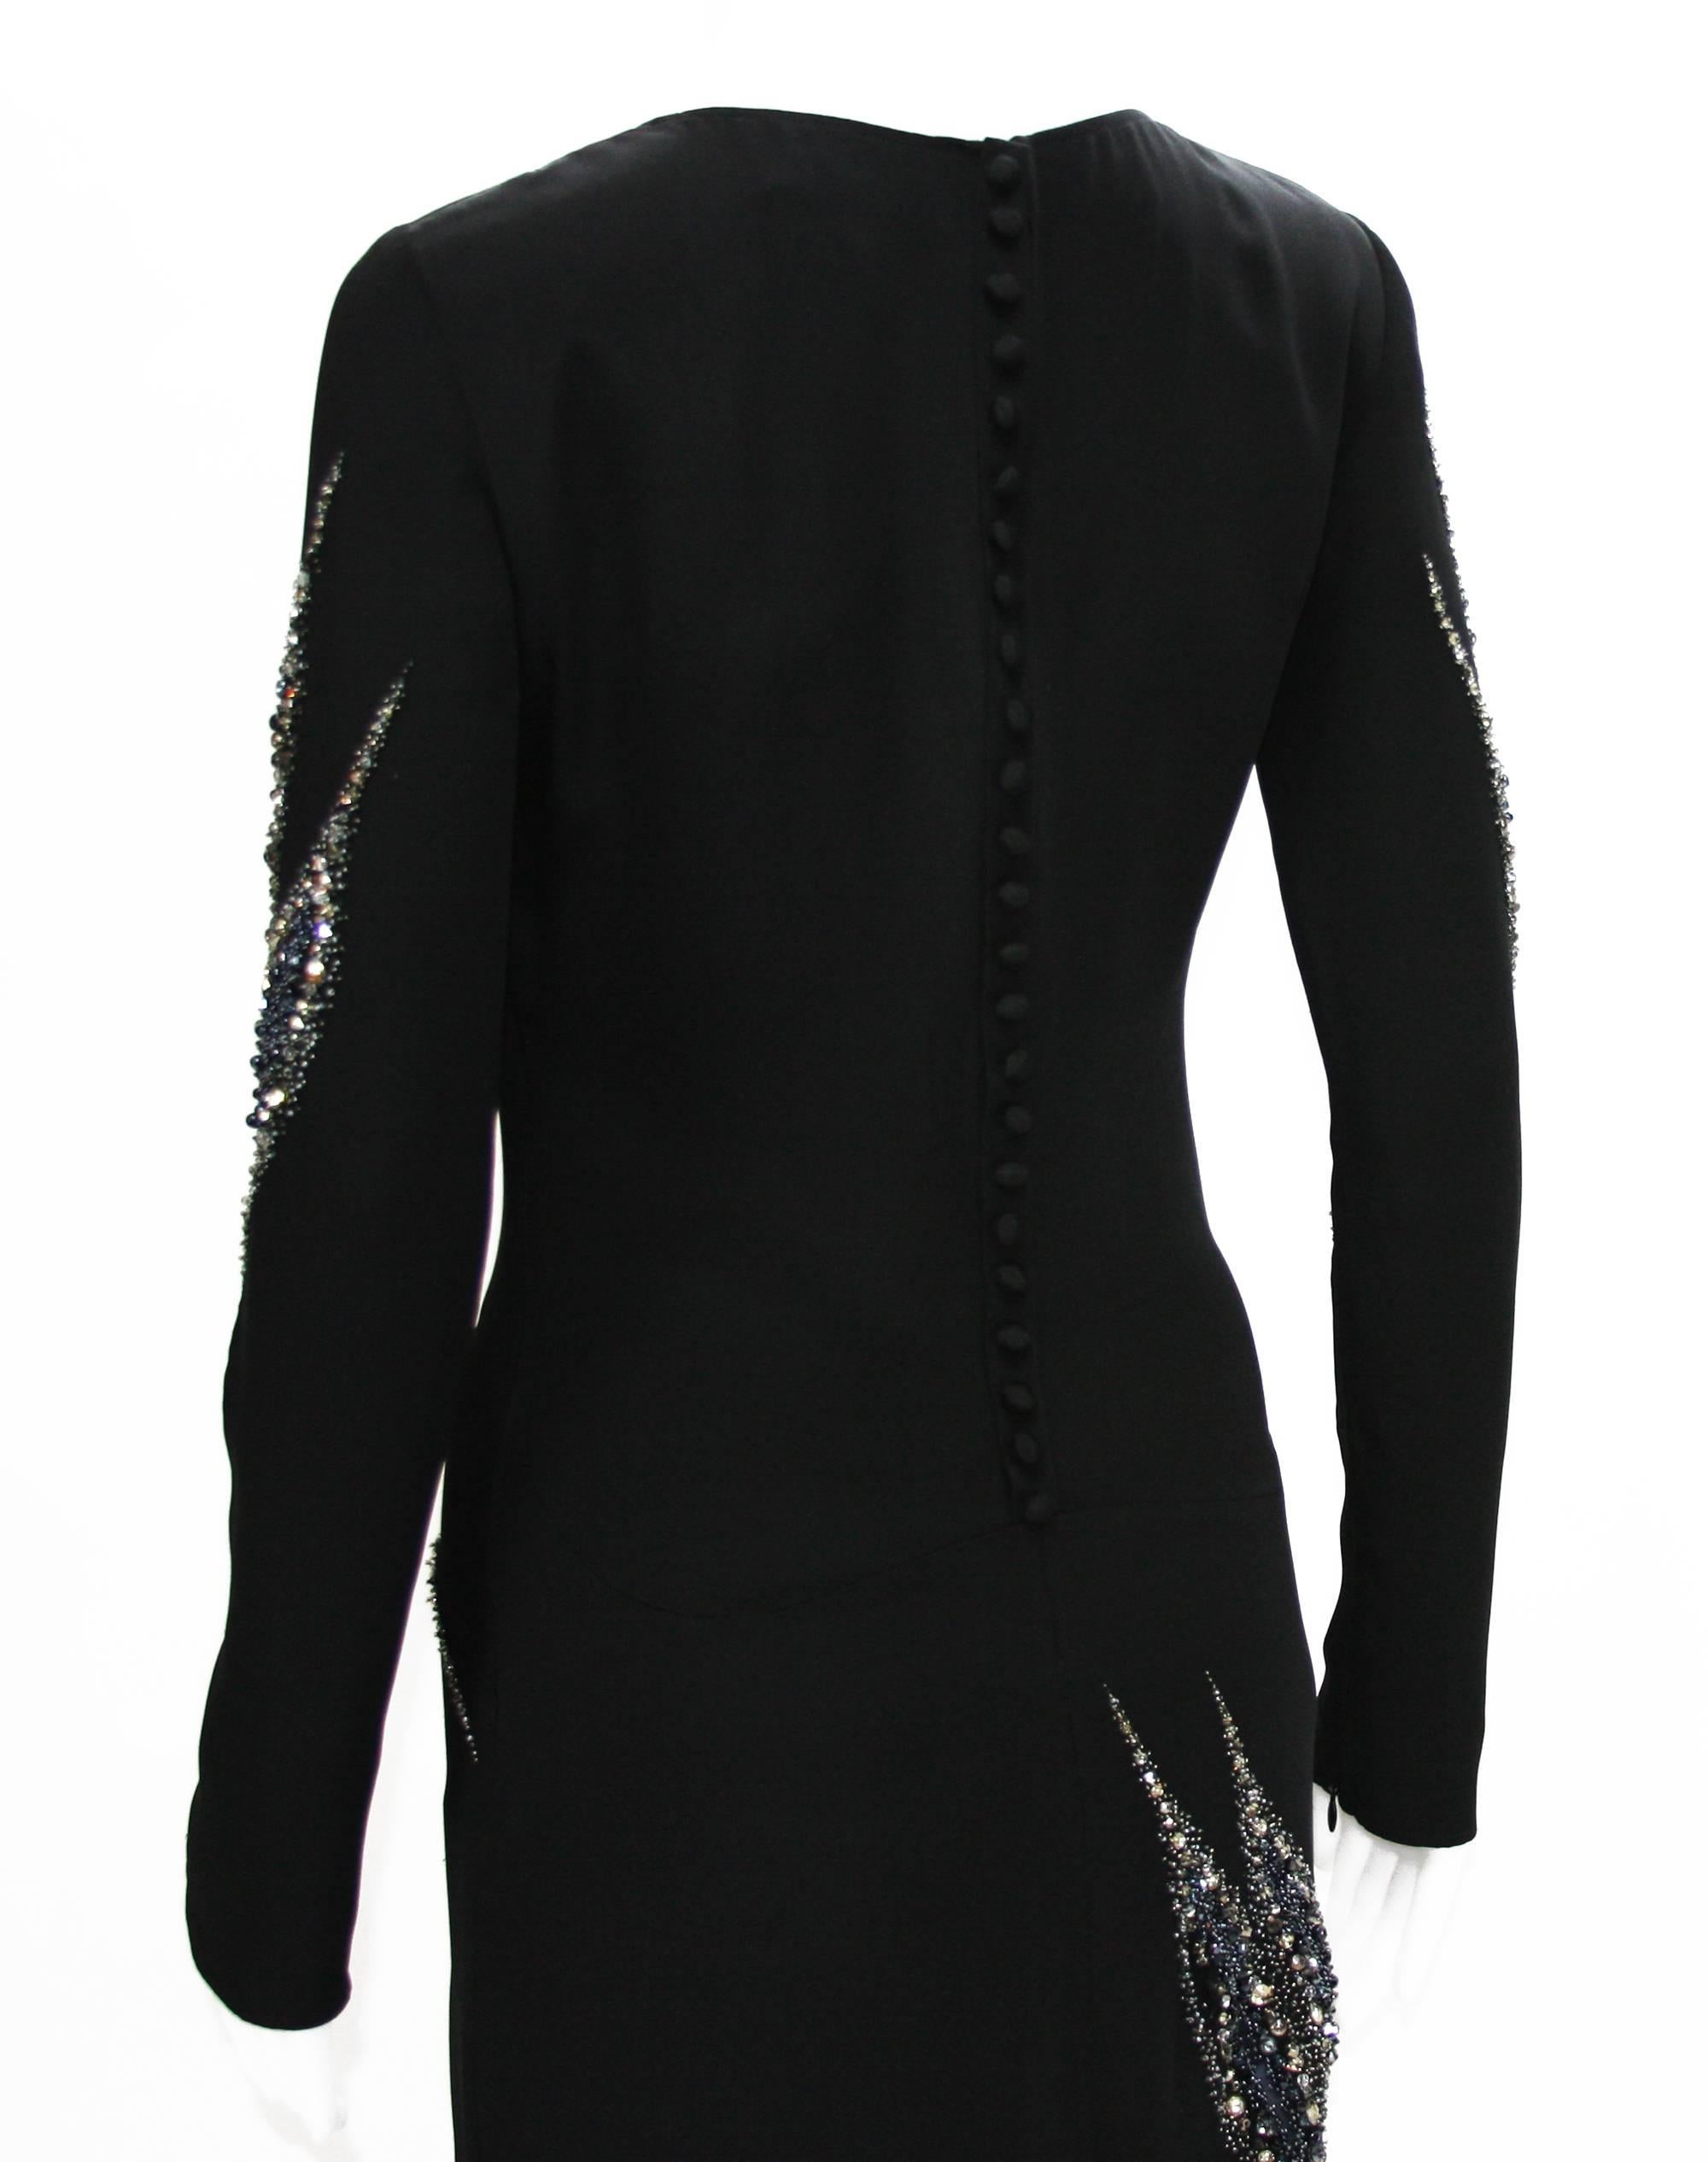 Emilio Pucci Embellished Gown Eva Longoria Wore to the ALMA Awards It 38 US 4 3